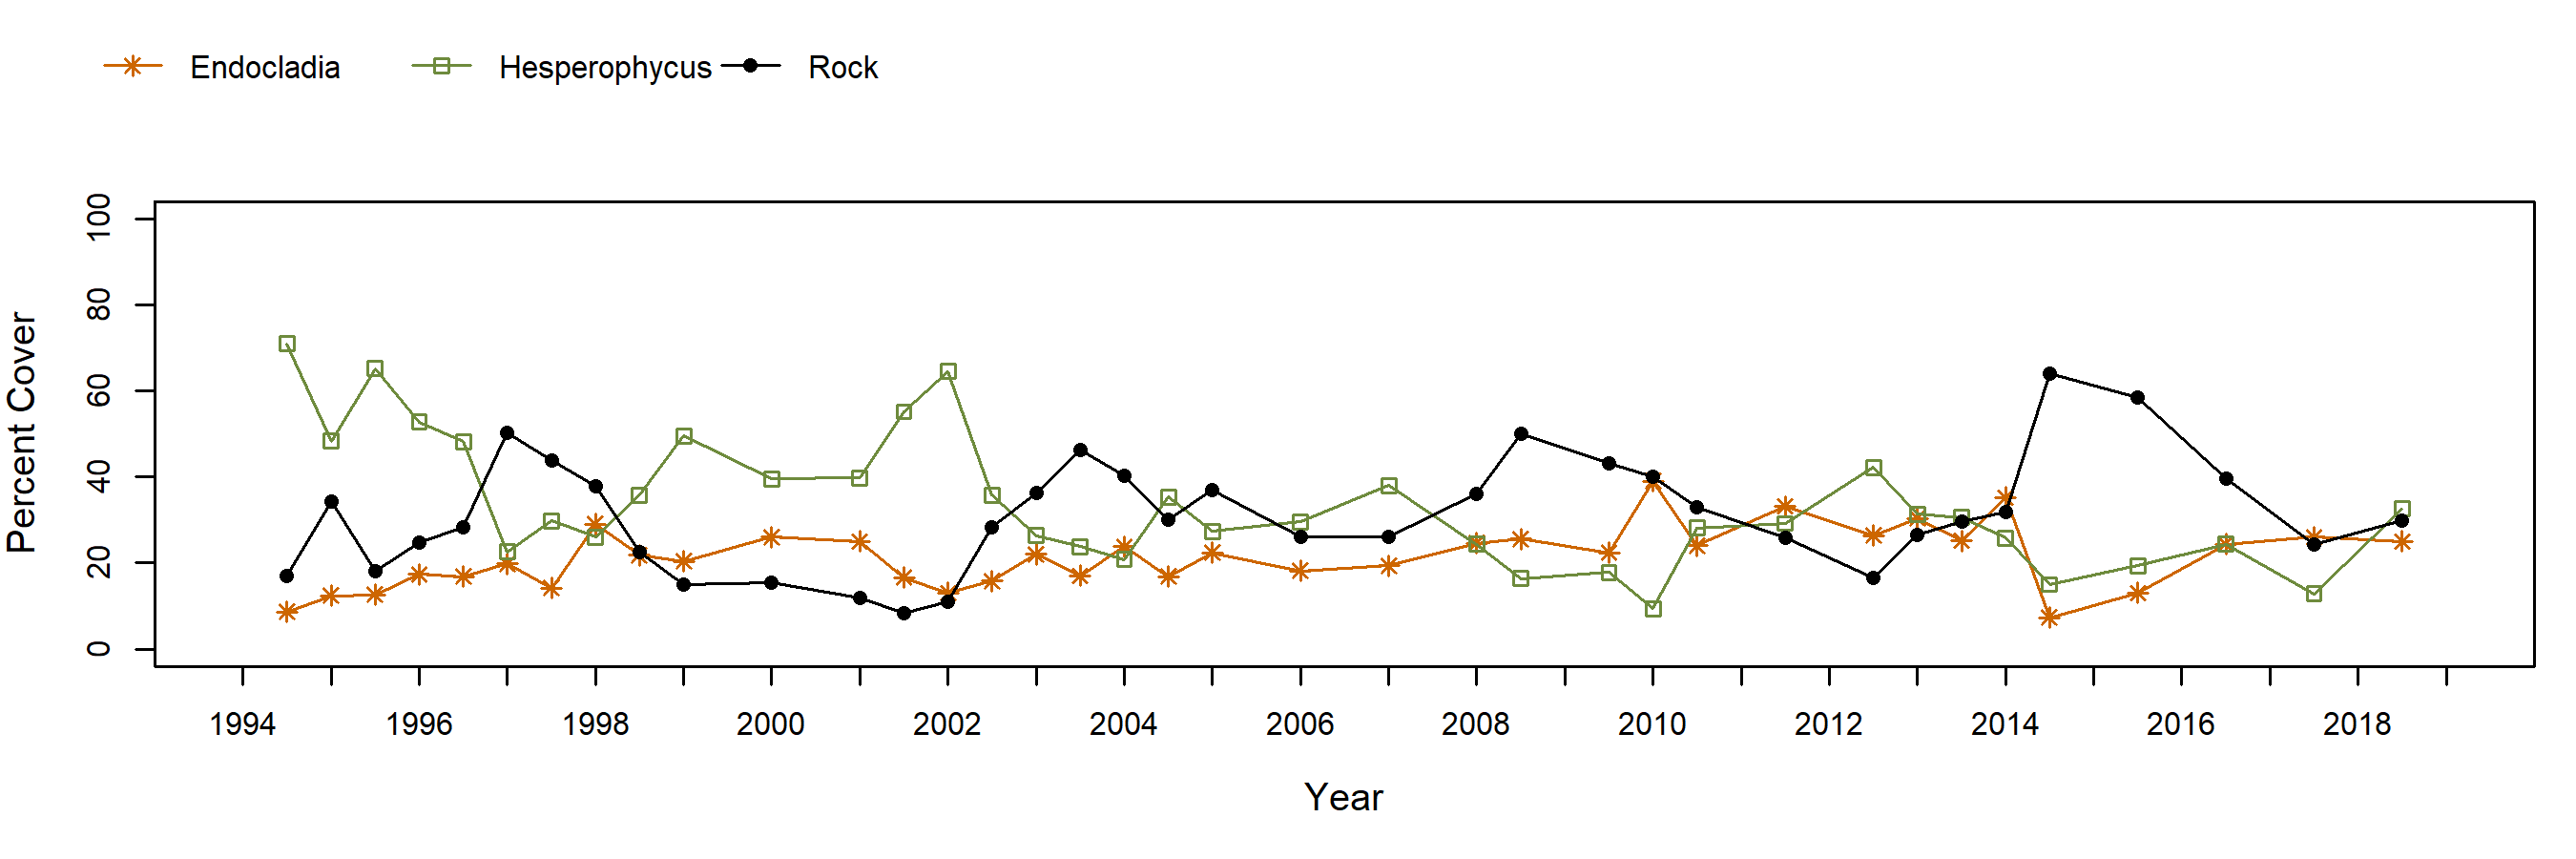 Scorpion Rock Hesperophycus trend plot